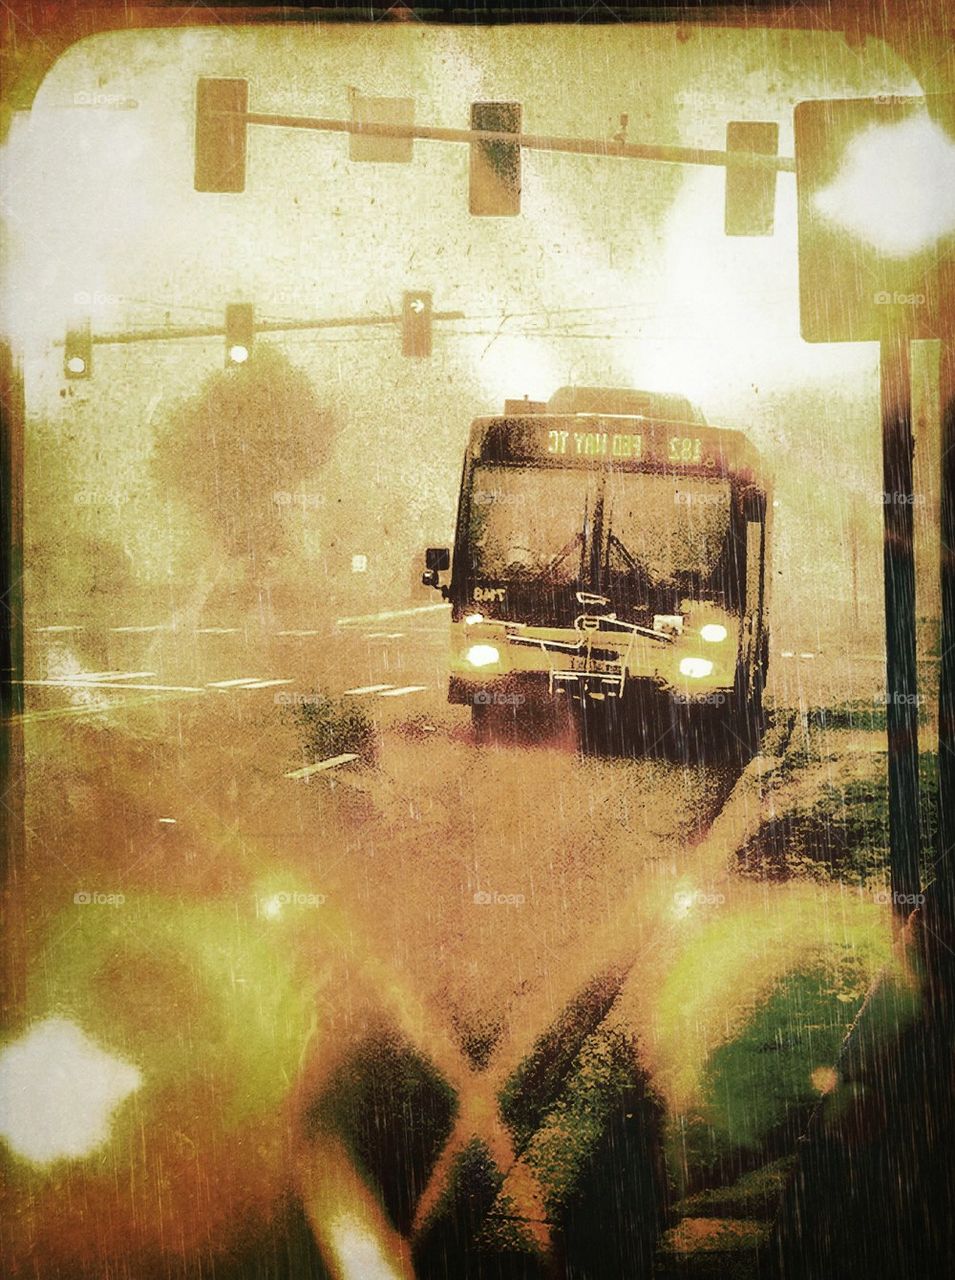 City bus in the rain